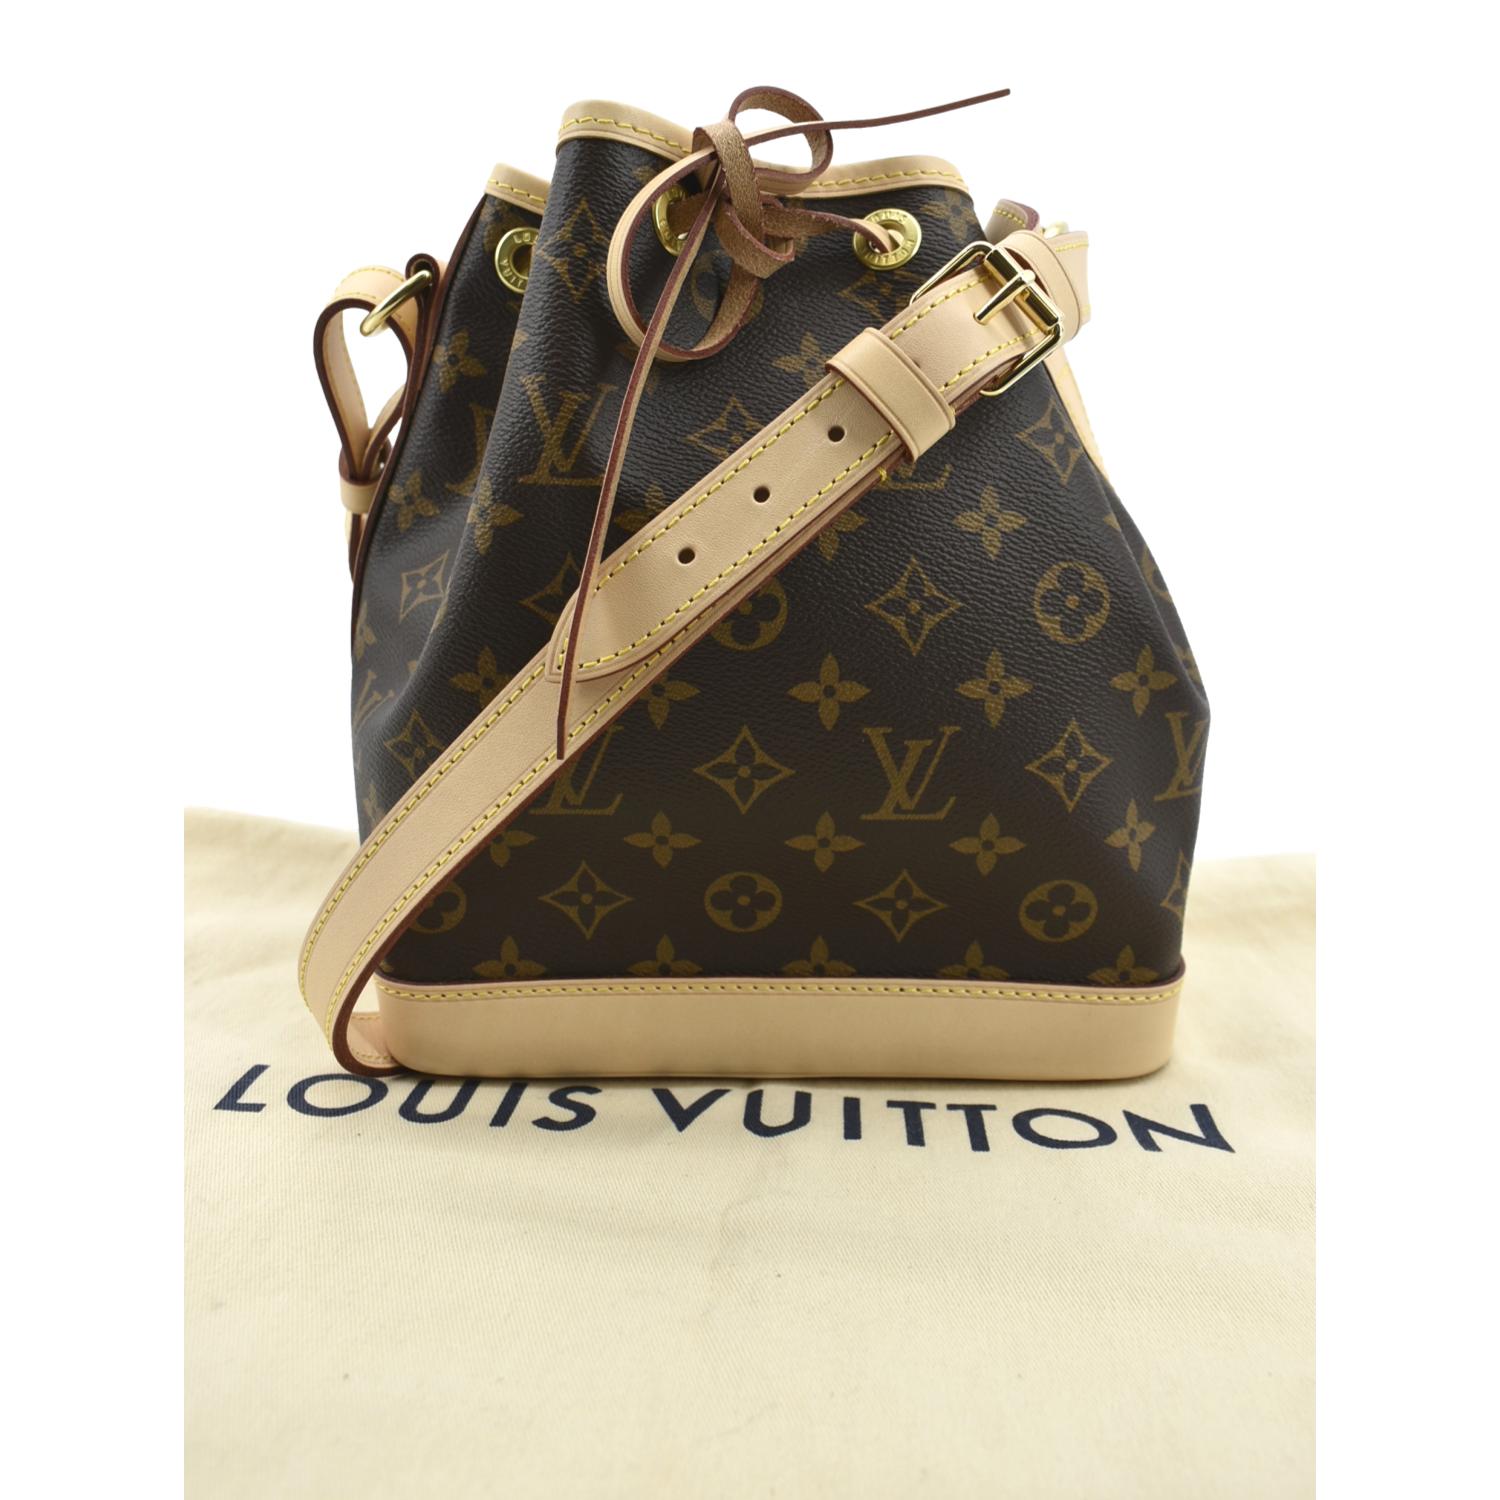 Vintage Louis Vuitton Monogram Canvas Noe Bag - Handbags - Shop Jewelry,  Watches & Accessories